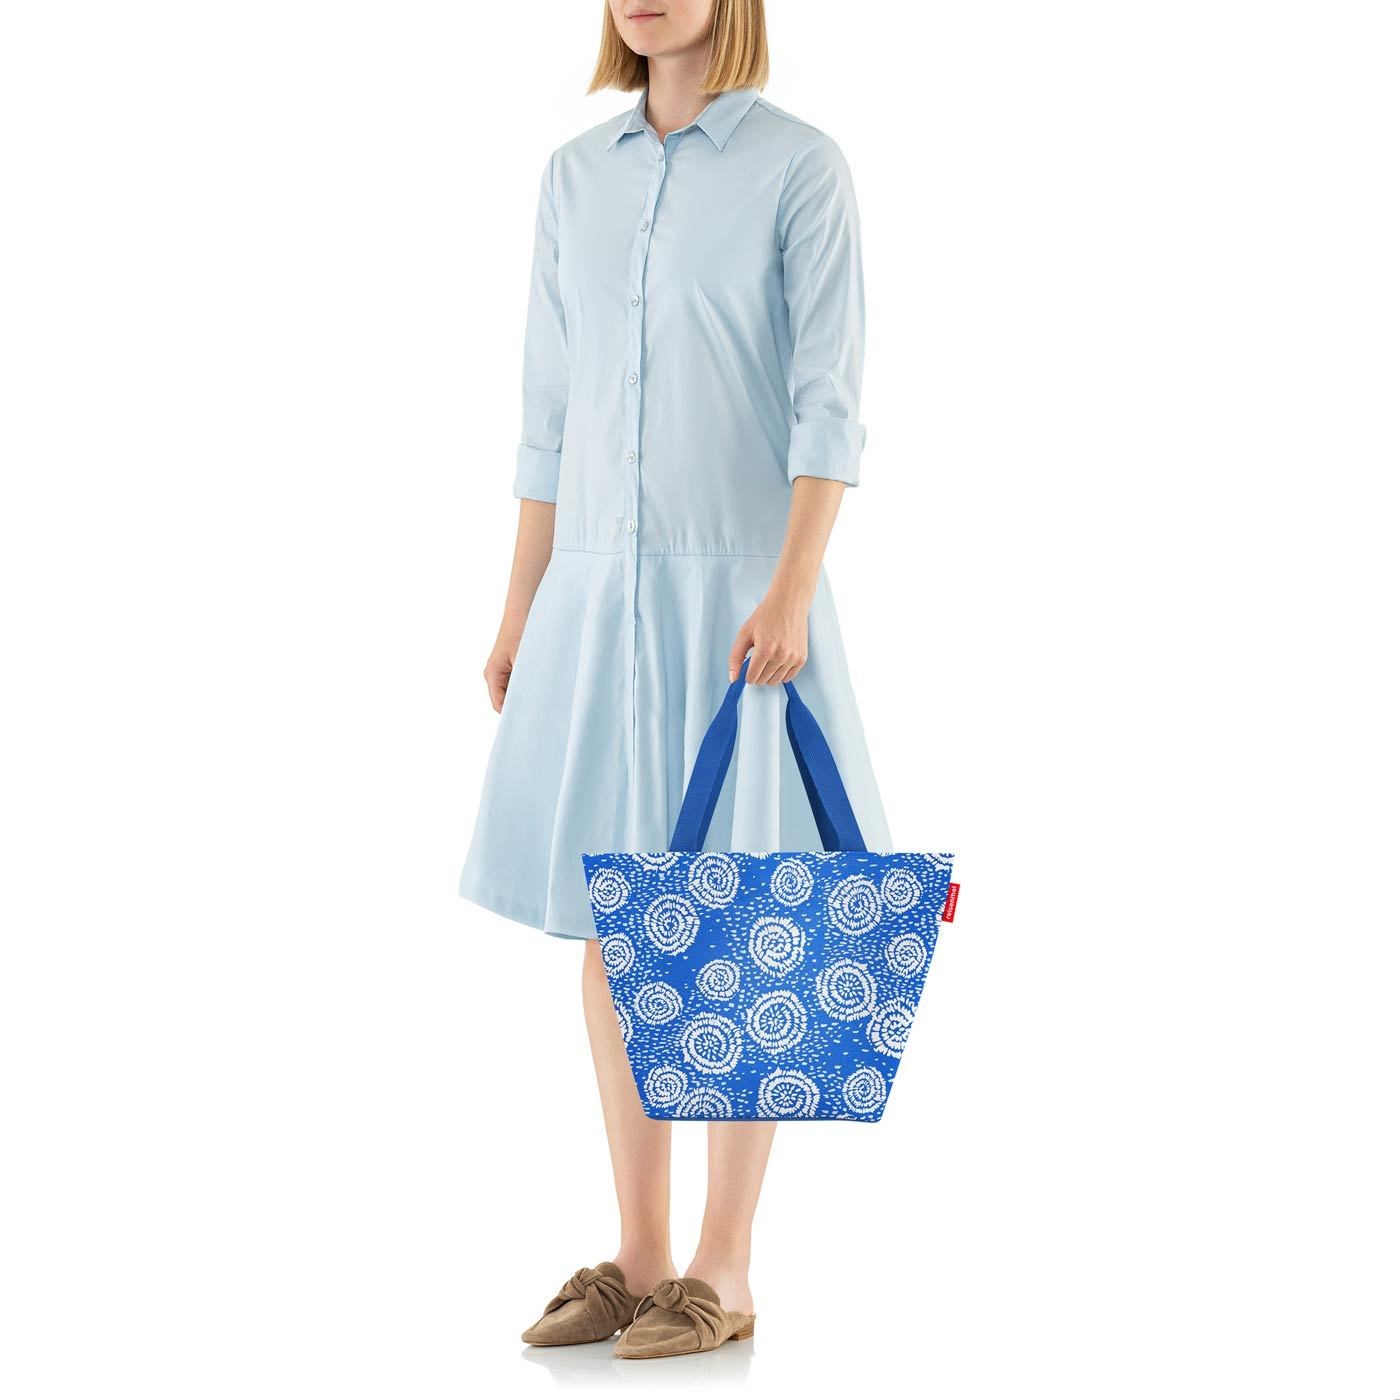 Taška přes rameno Shopper M batik strong blue_1